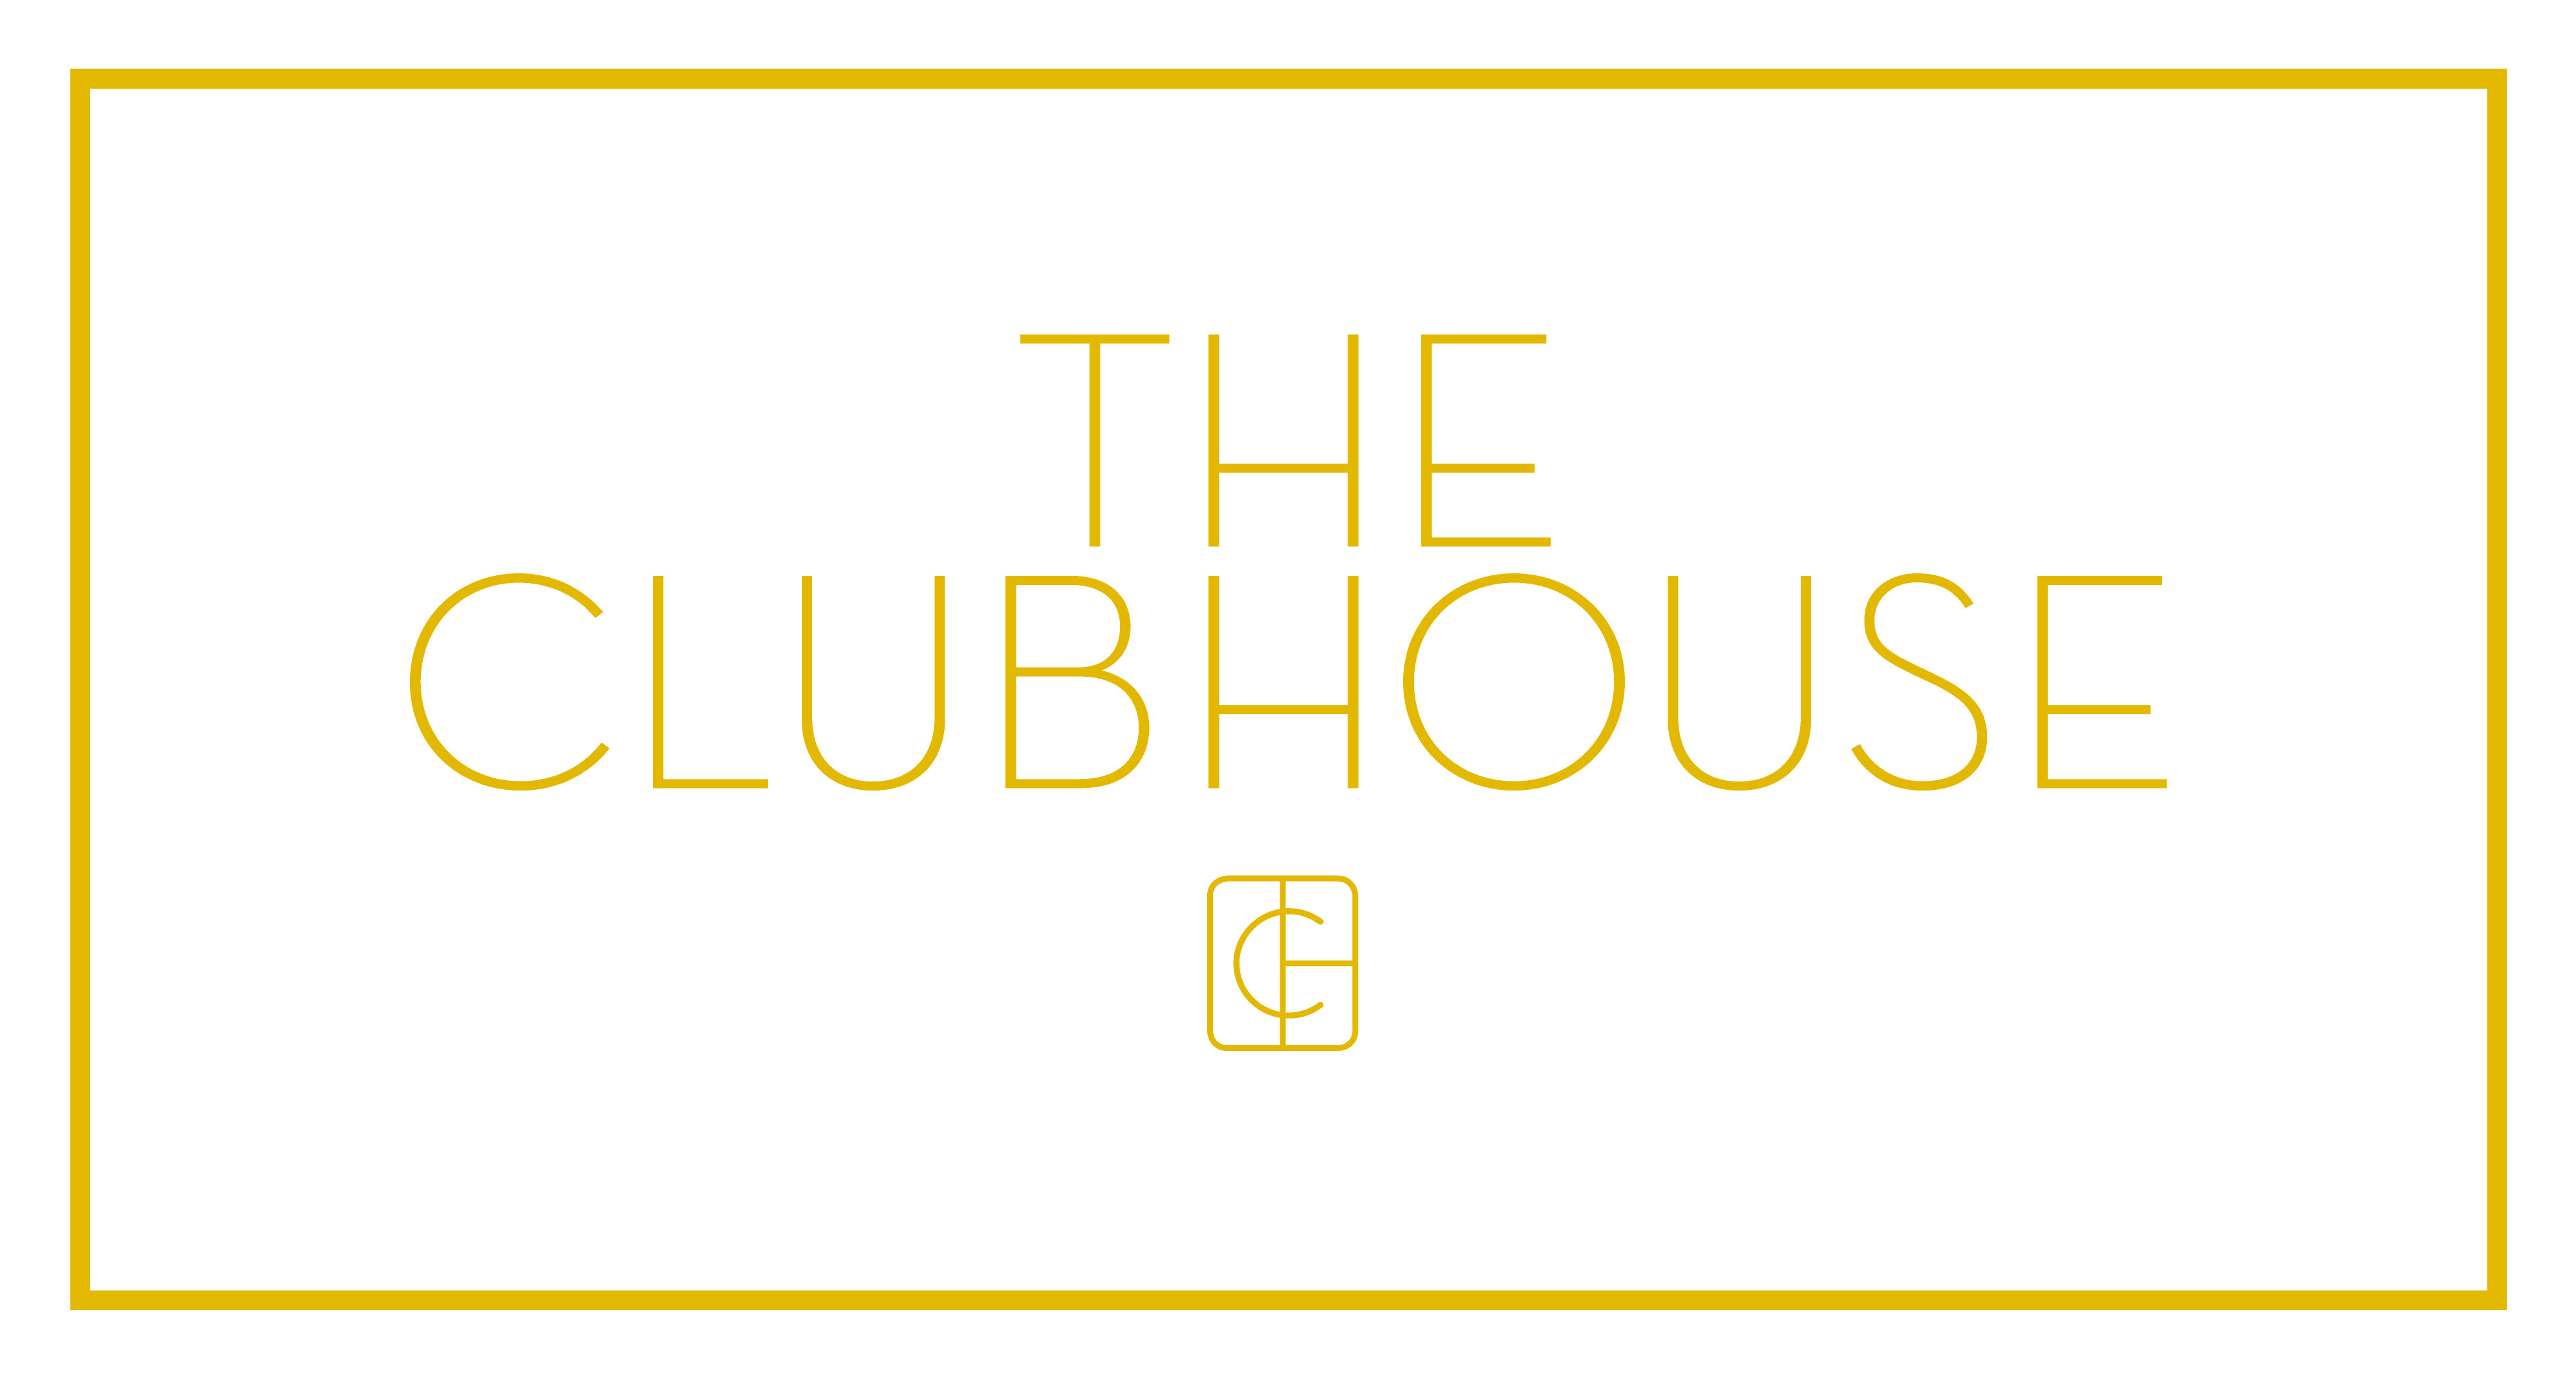 The club house